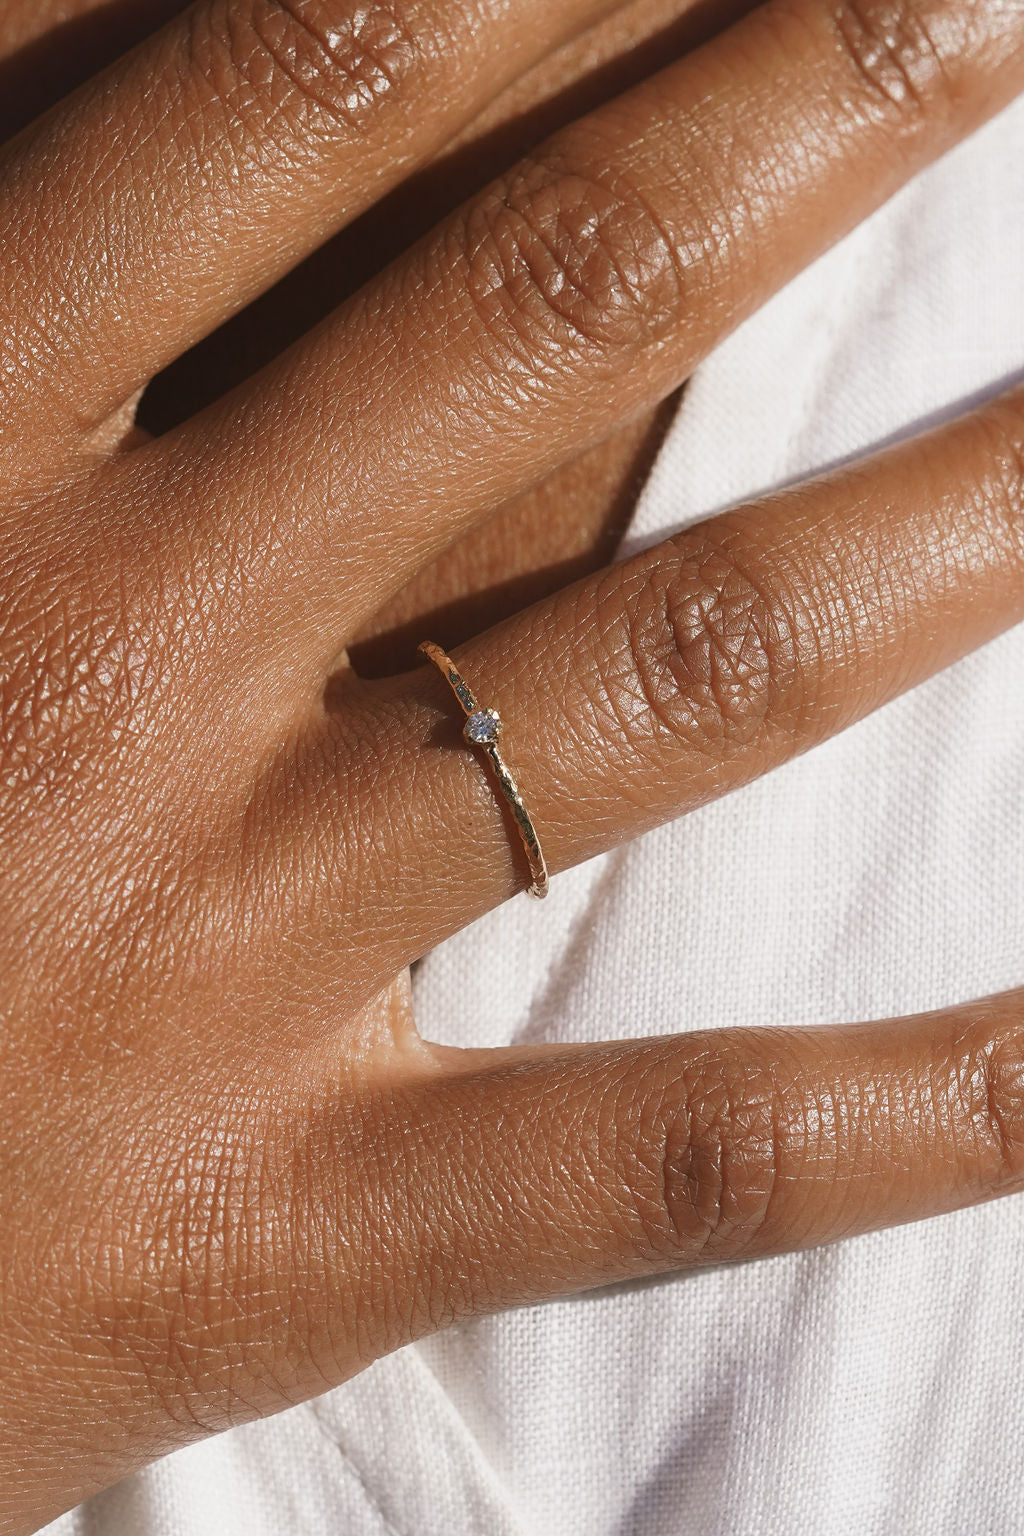 10 Popular Gemstones for Dainty Engagement Rings 💎💍